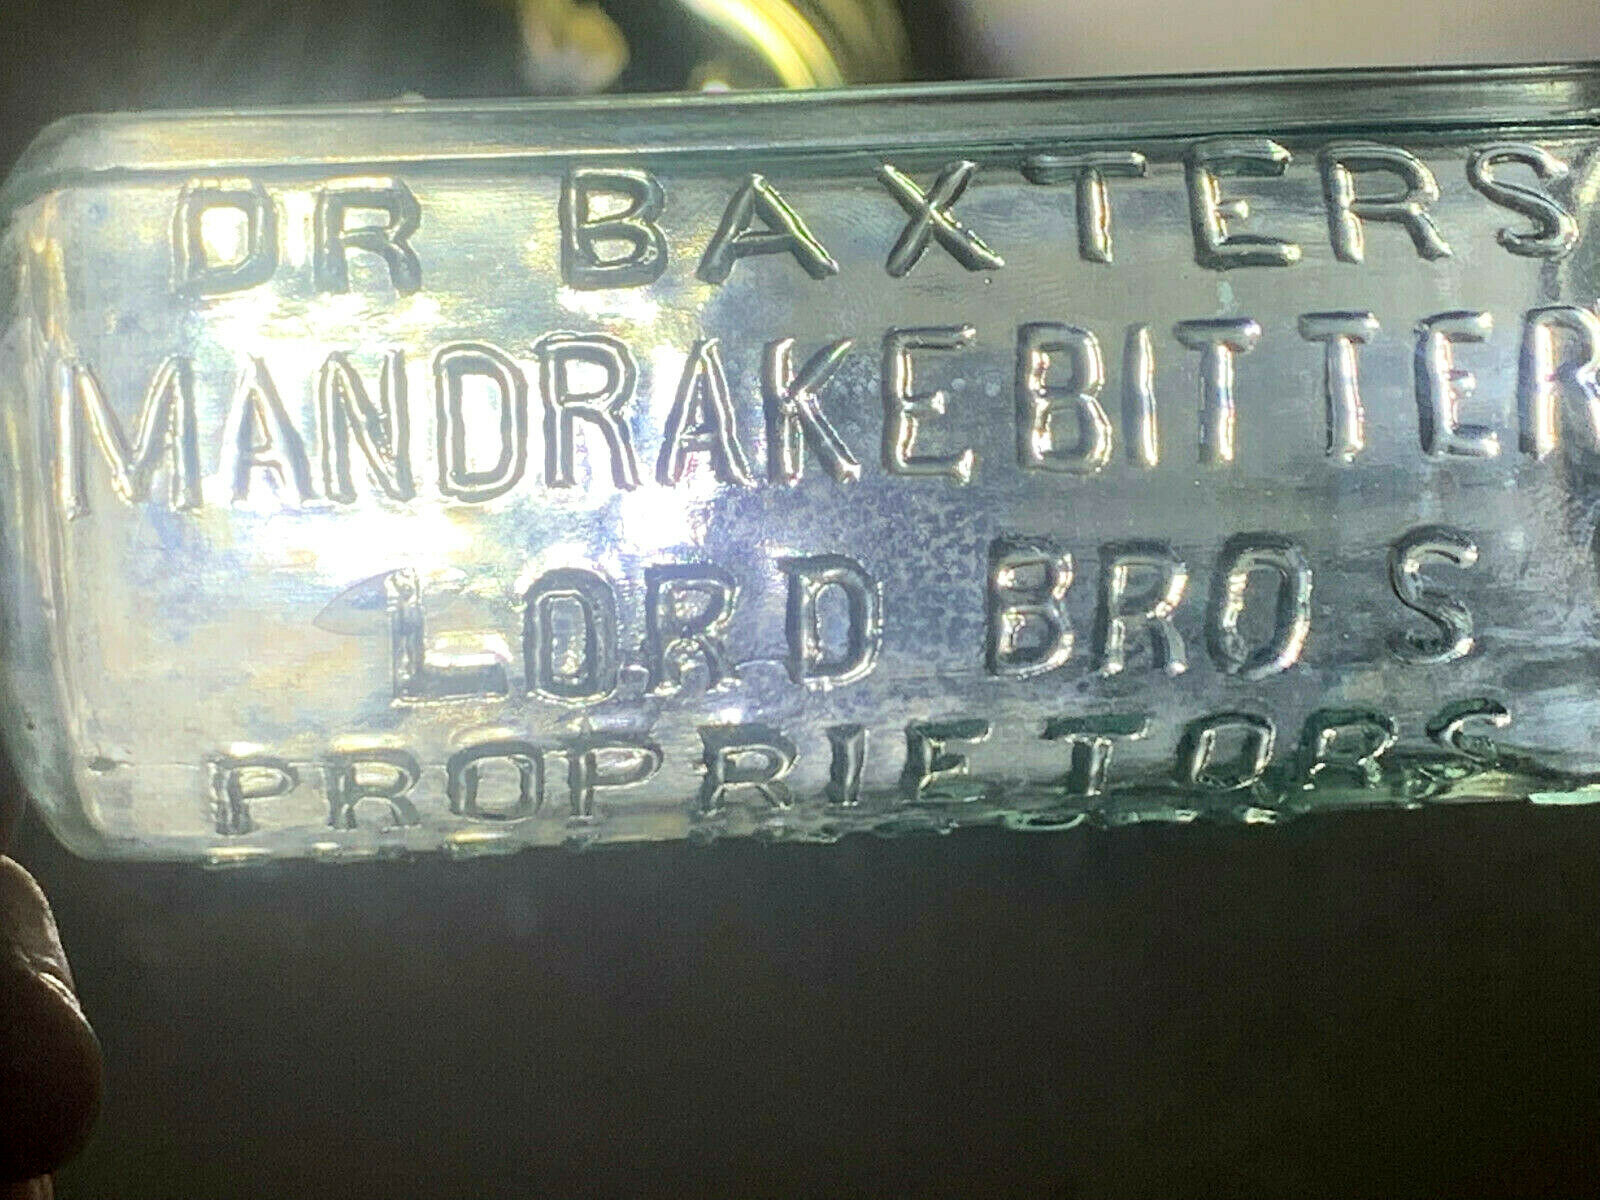 Dr Baxters Mandrake Bitters Bottle Lord Bros  Burlington Vermont,12 Sided